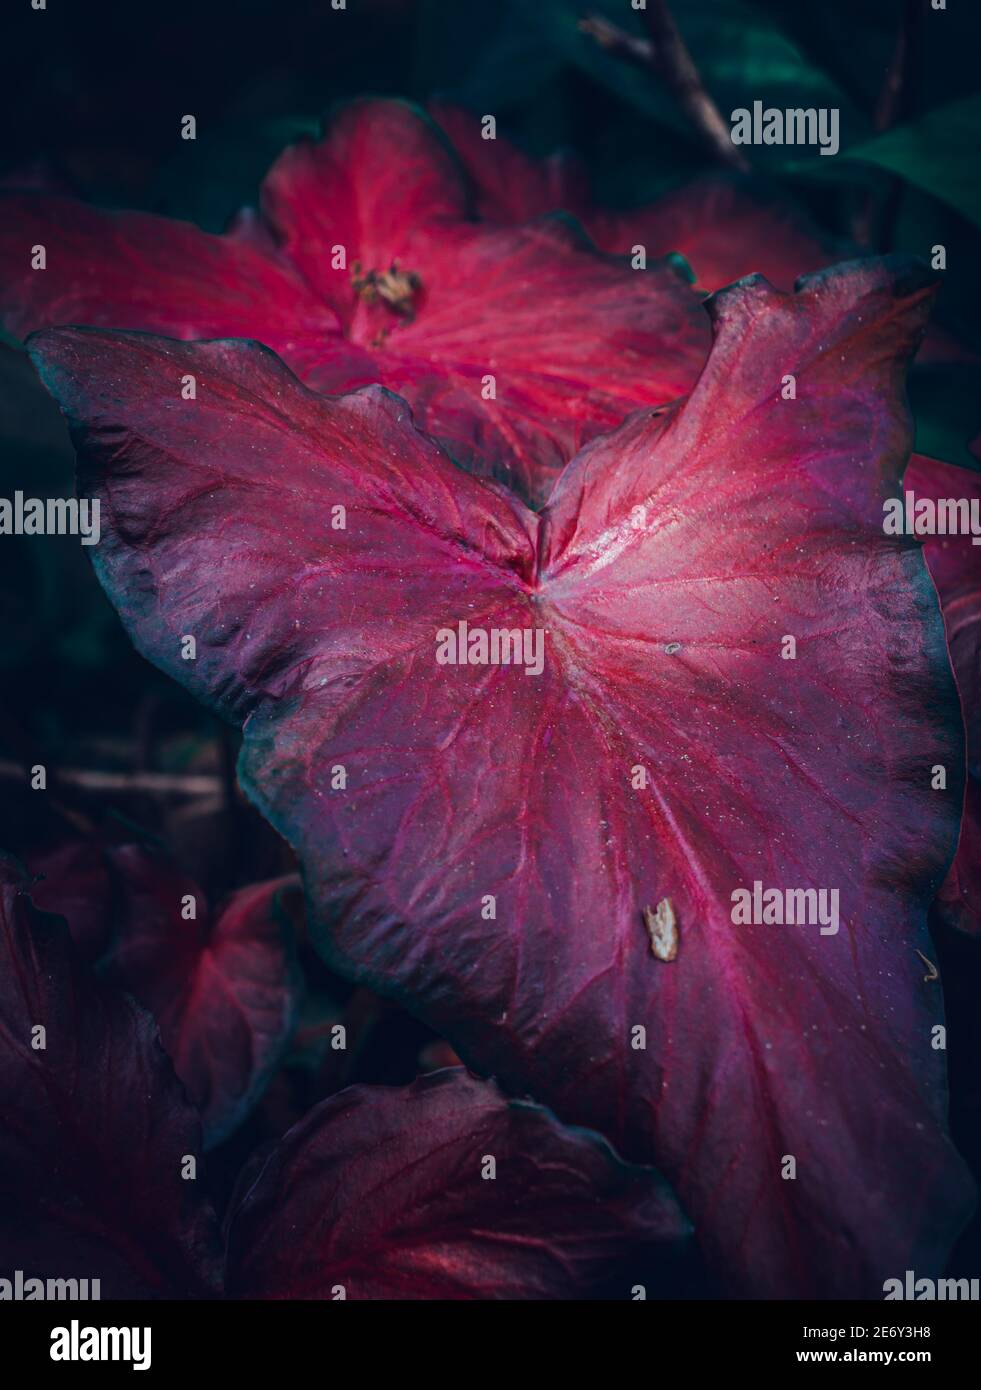 Large red Caladium leaves photograph Stock Photo